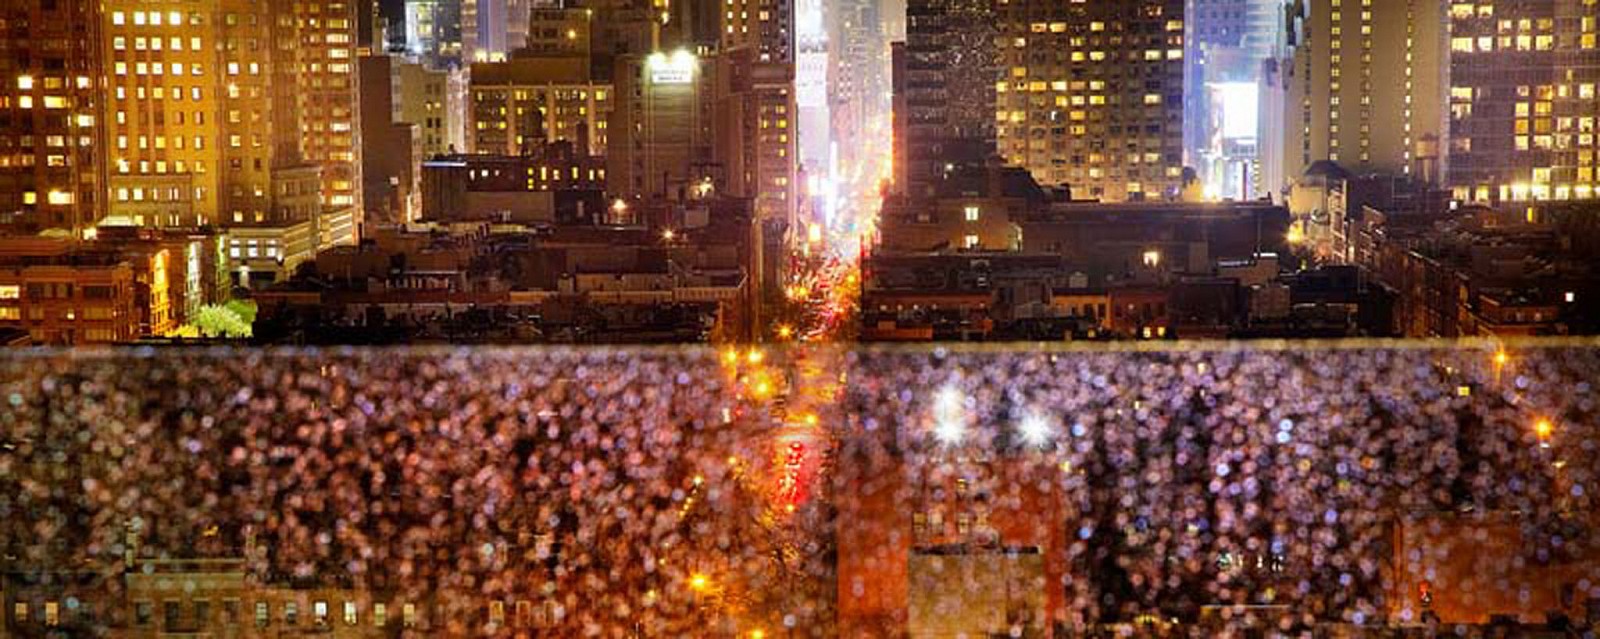 David Drebin, Dreams of New York, 2011
Digital C Print, 20 x 48 inches; 30 x 72 inches; 40 x 96 inches